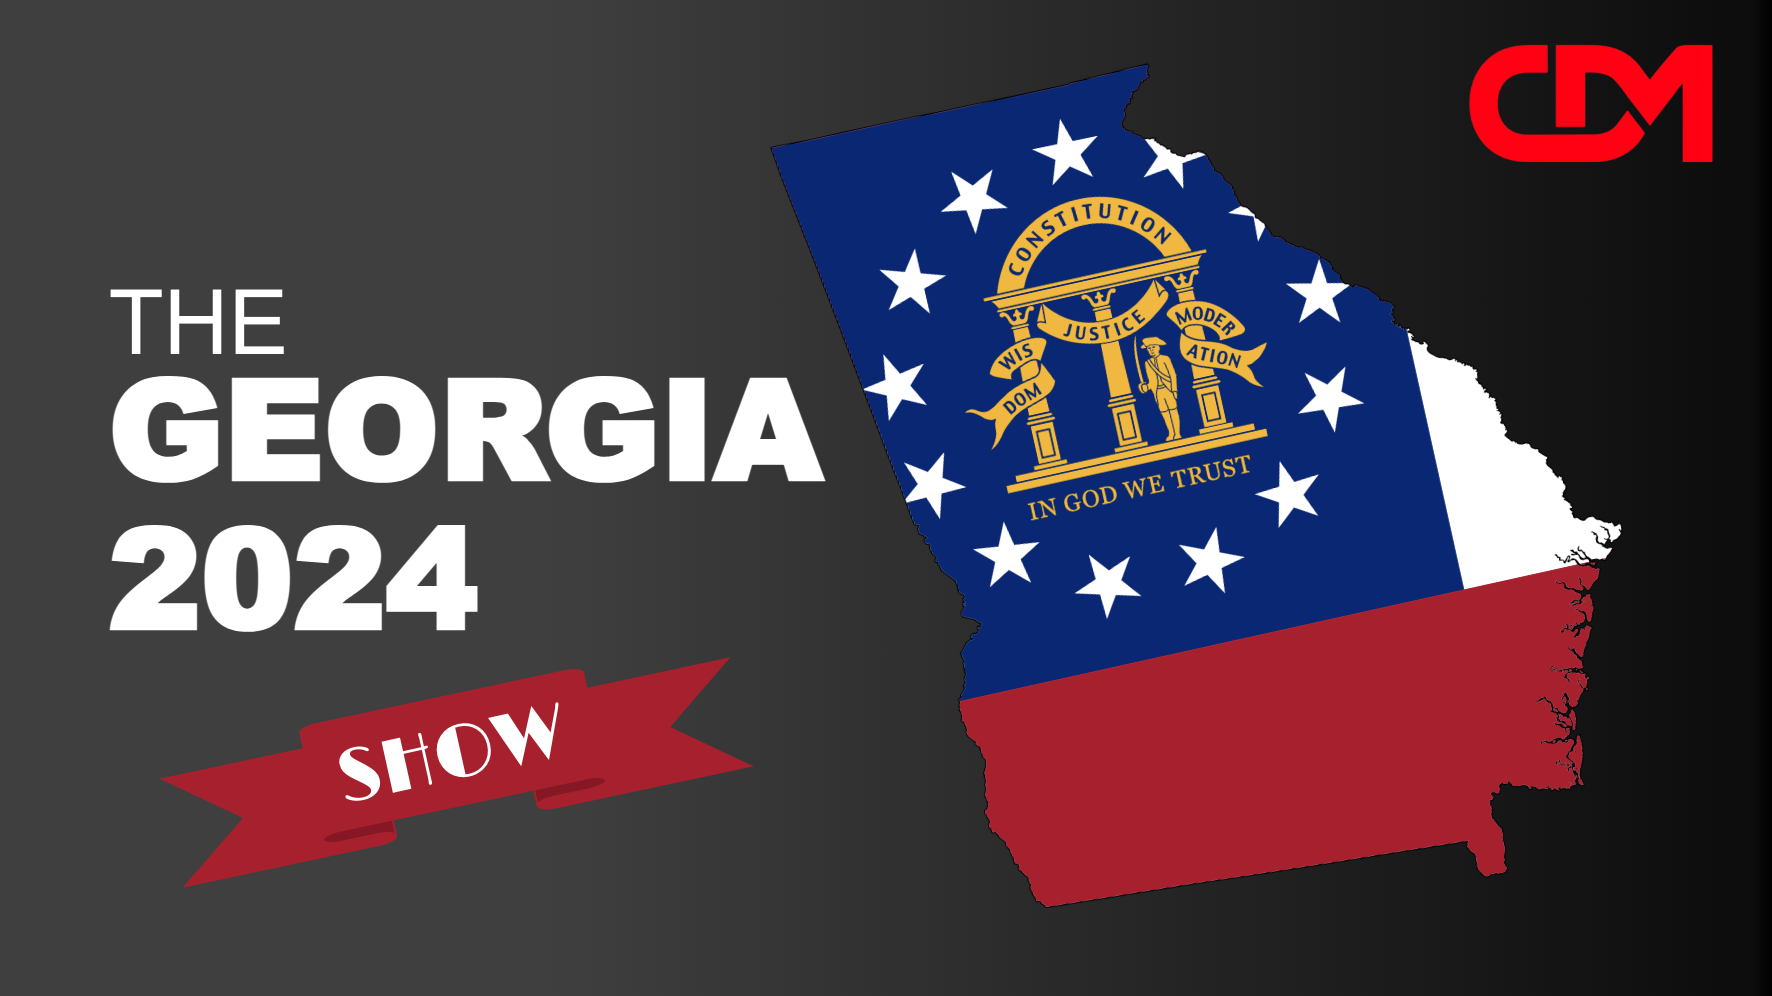 LIVESTREAM 2pm EST: The Georgia 2024 Show! With David Cross, Michael Daugherty, Chris Gleason And More!